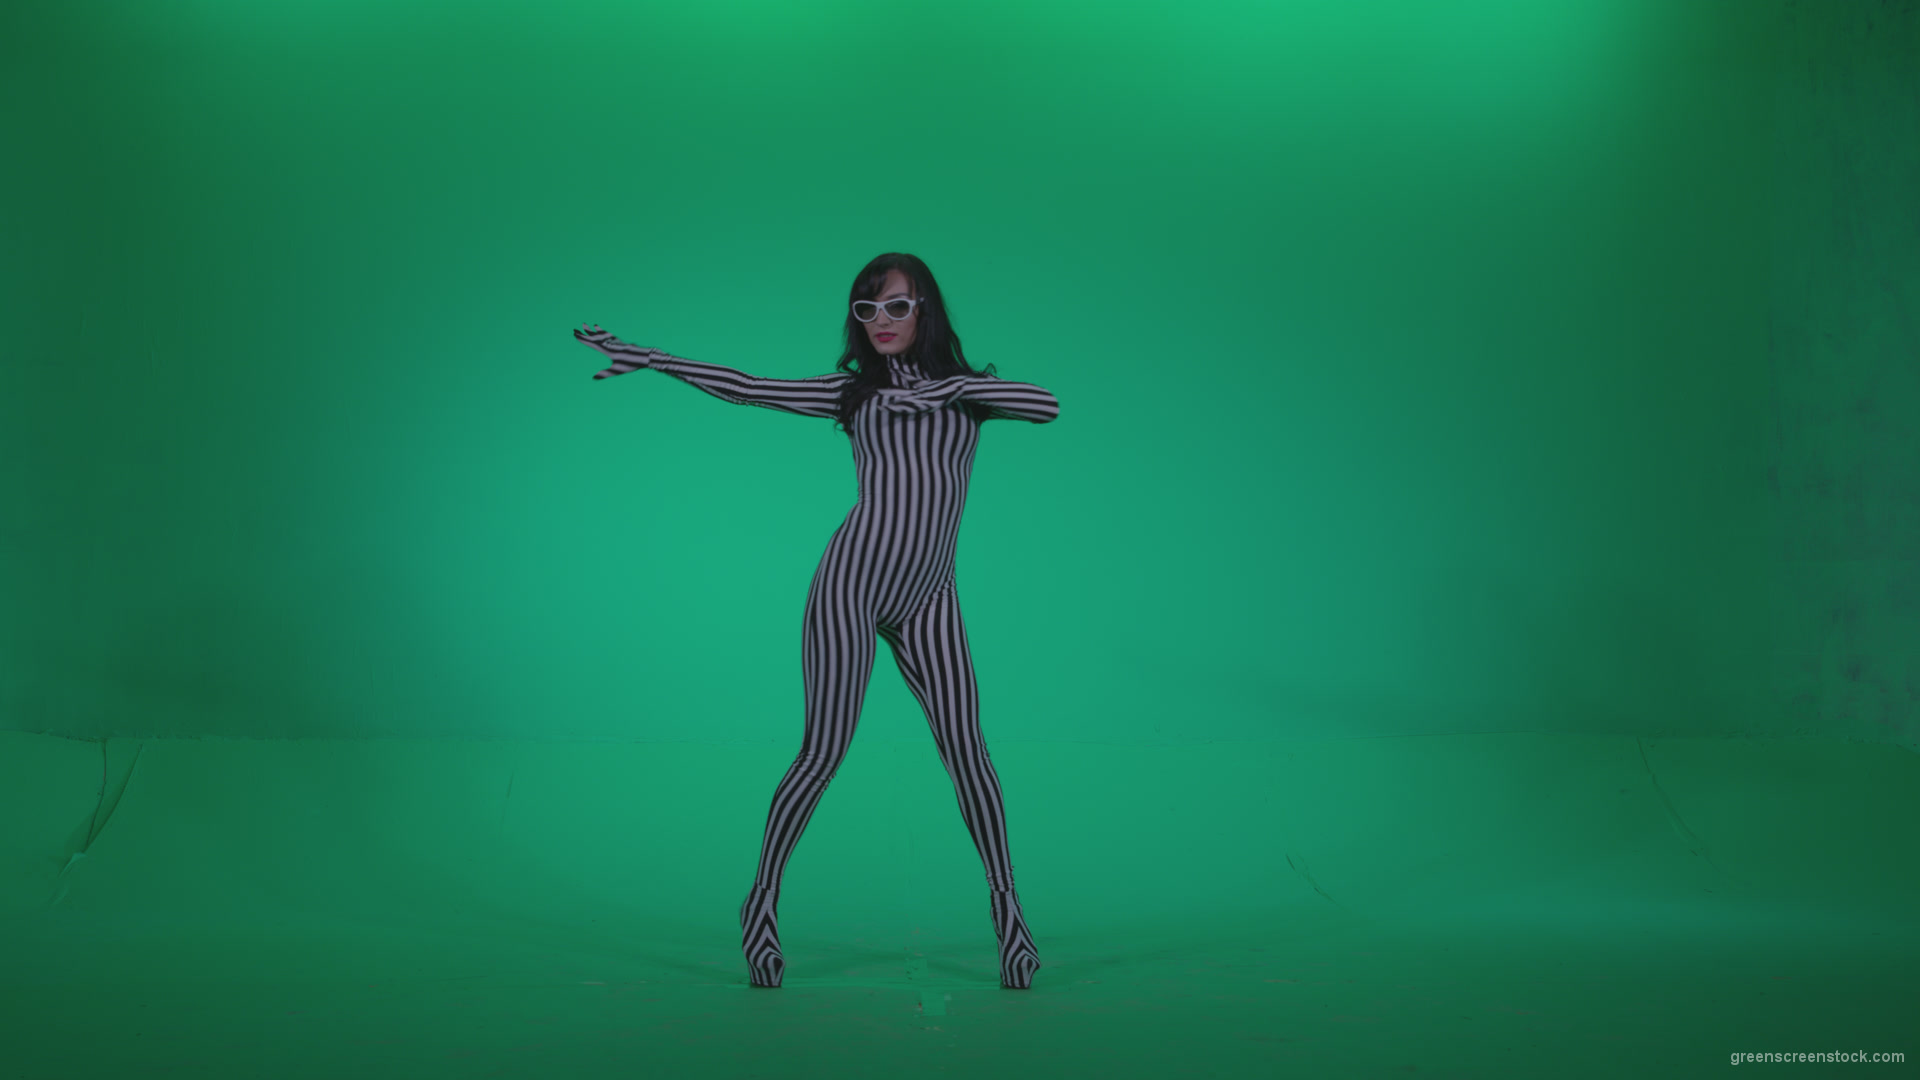 Go-go-Dancer-White-Stripes-s10-Green-Screen-Video-Footage_009 Green Screen Stock